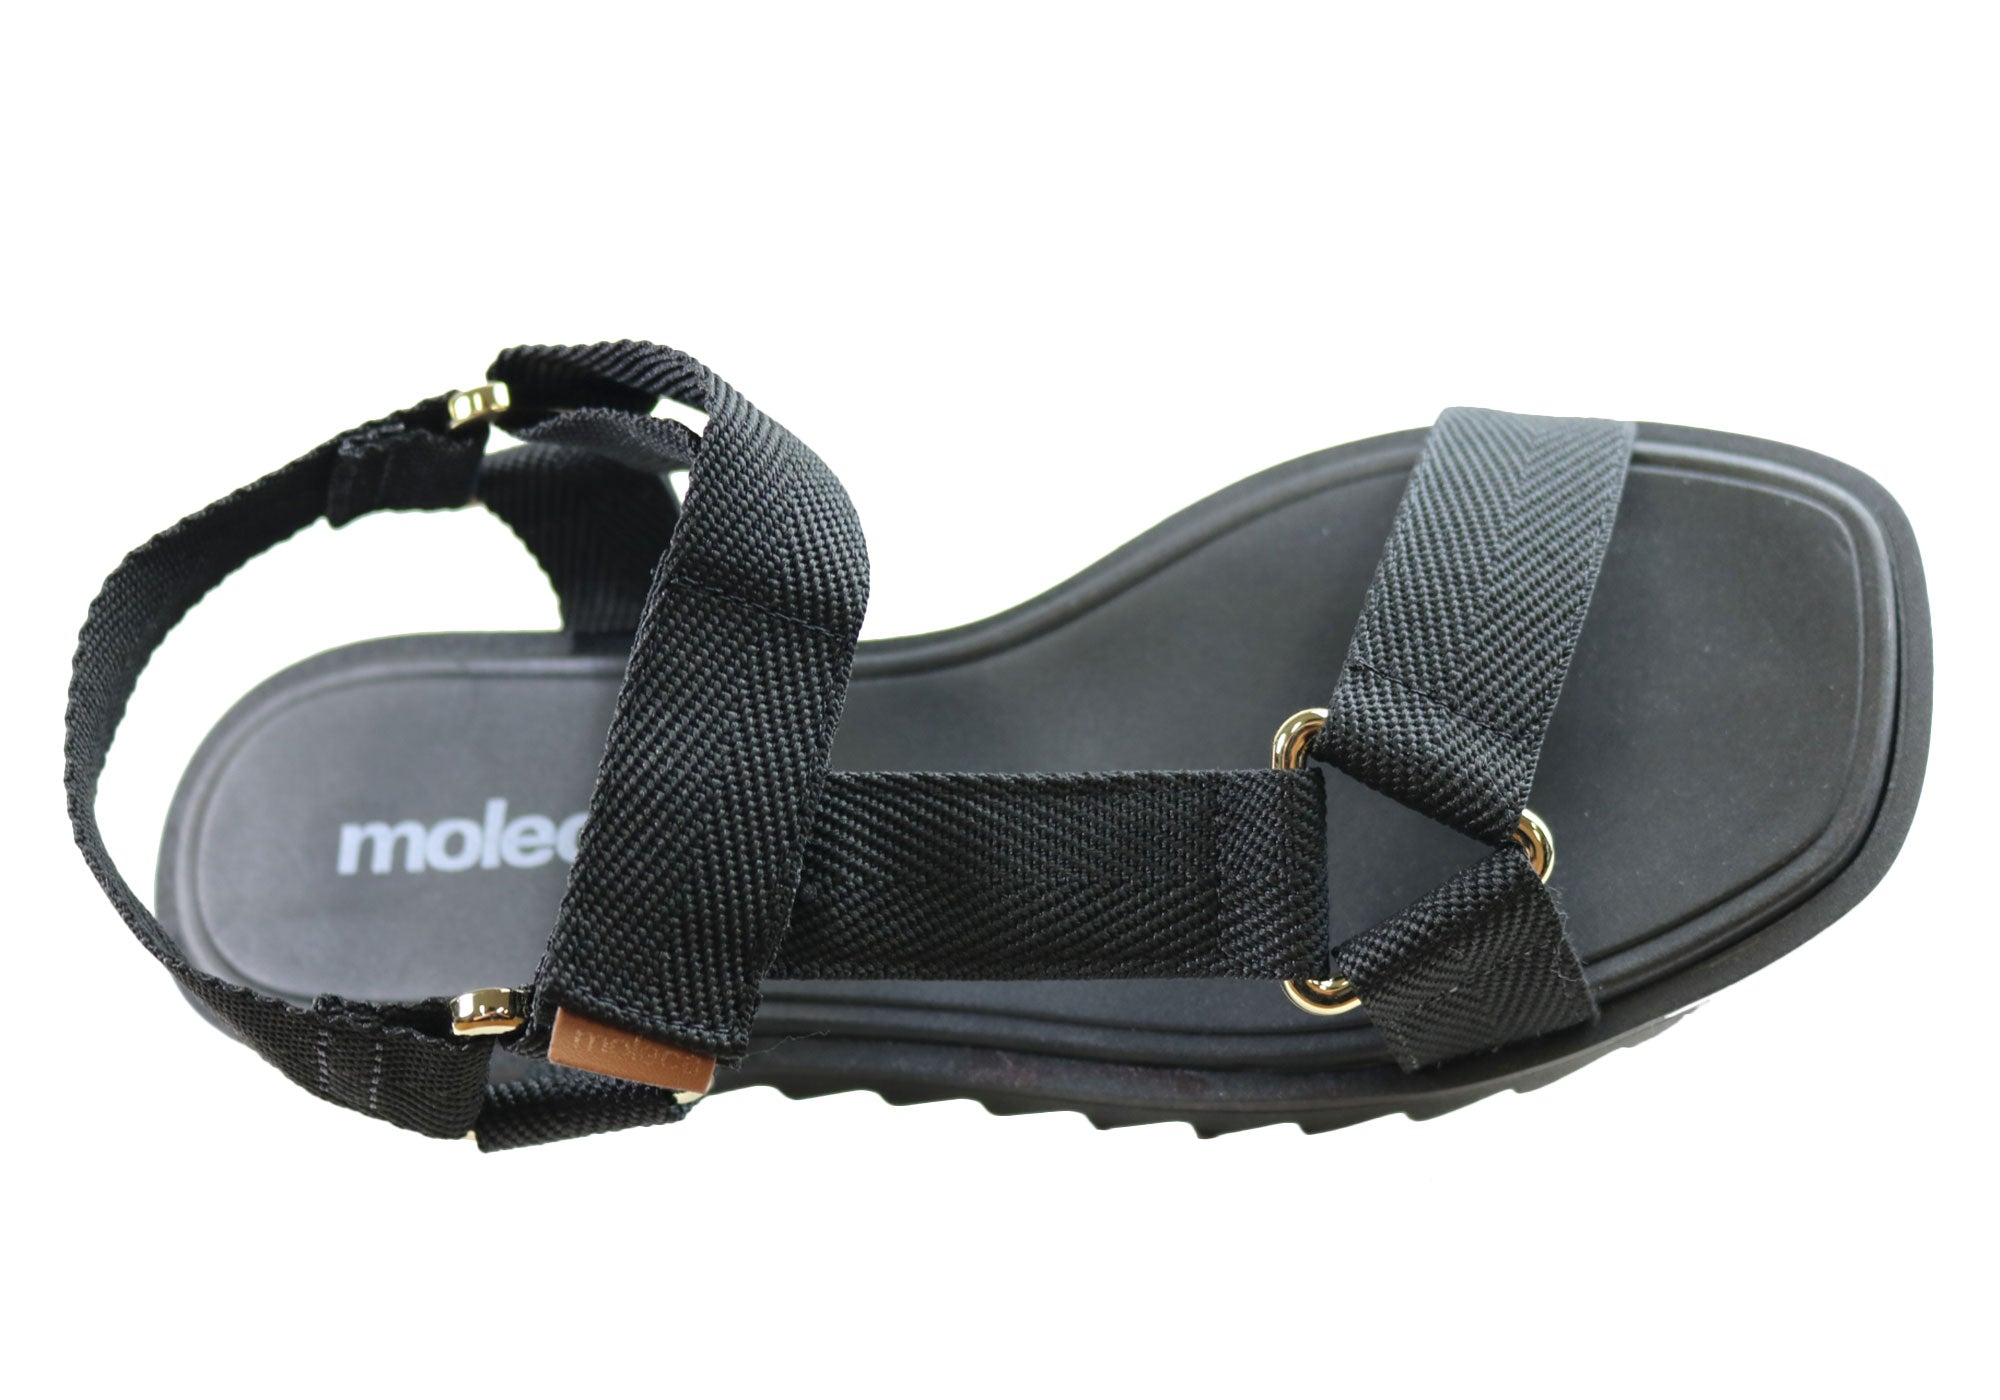 Moleca Sorento Womens Comfortable Sandals Made In Brazil